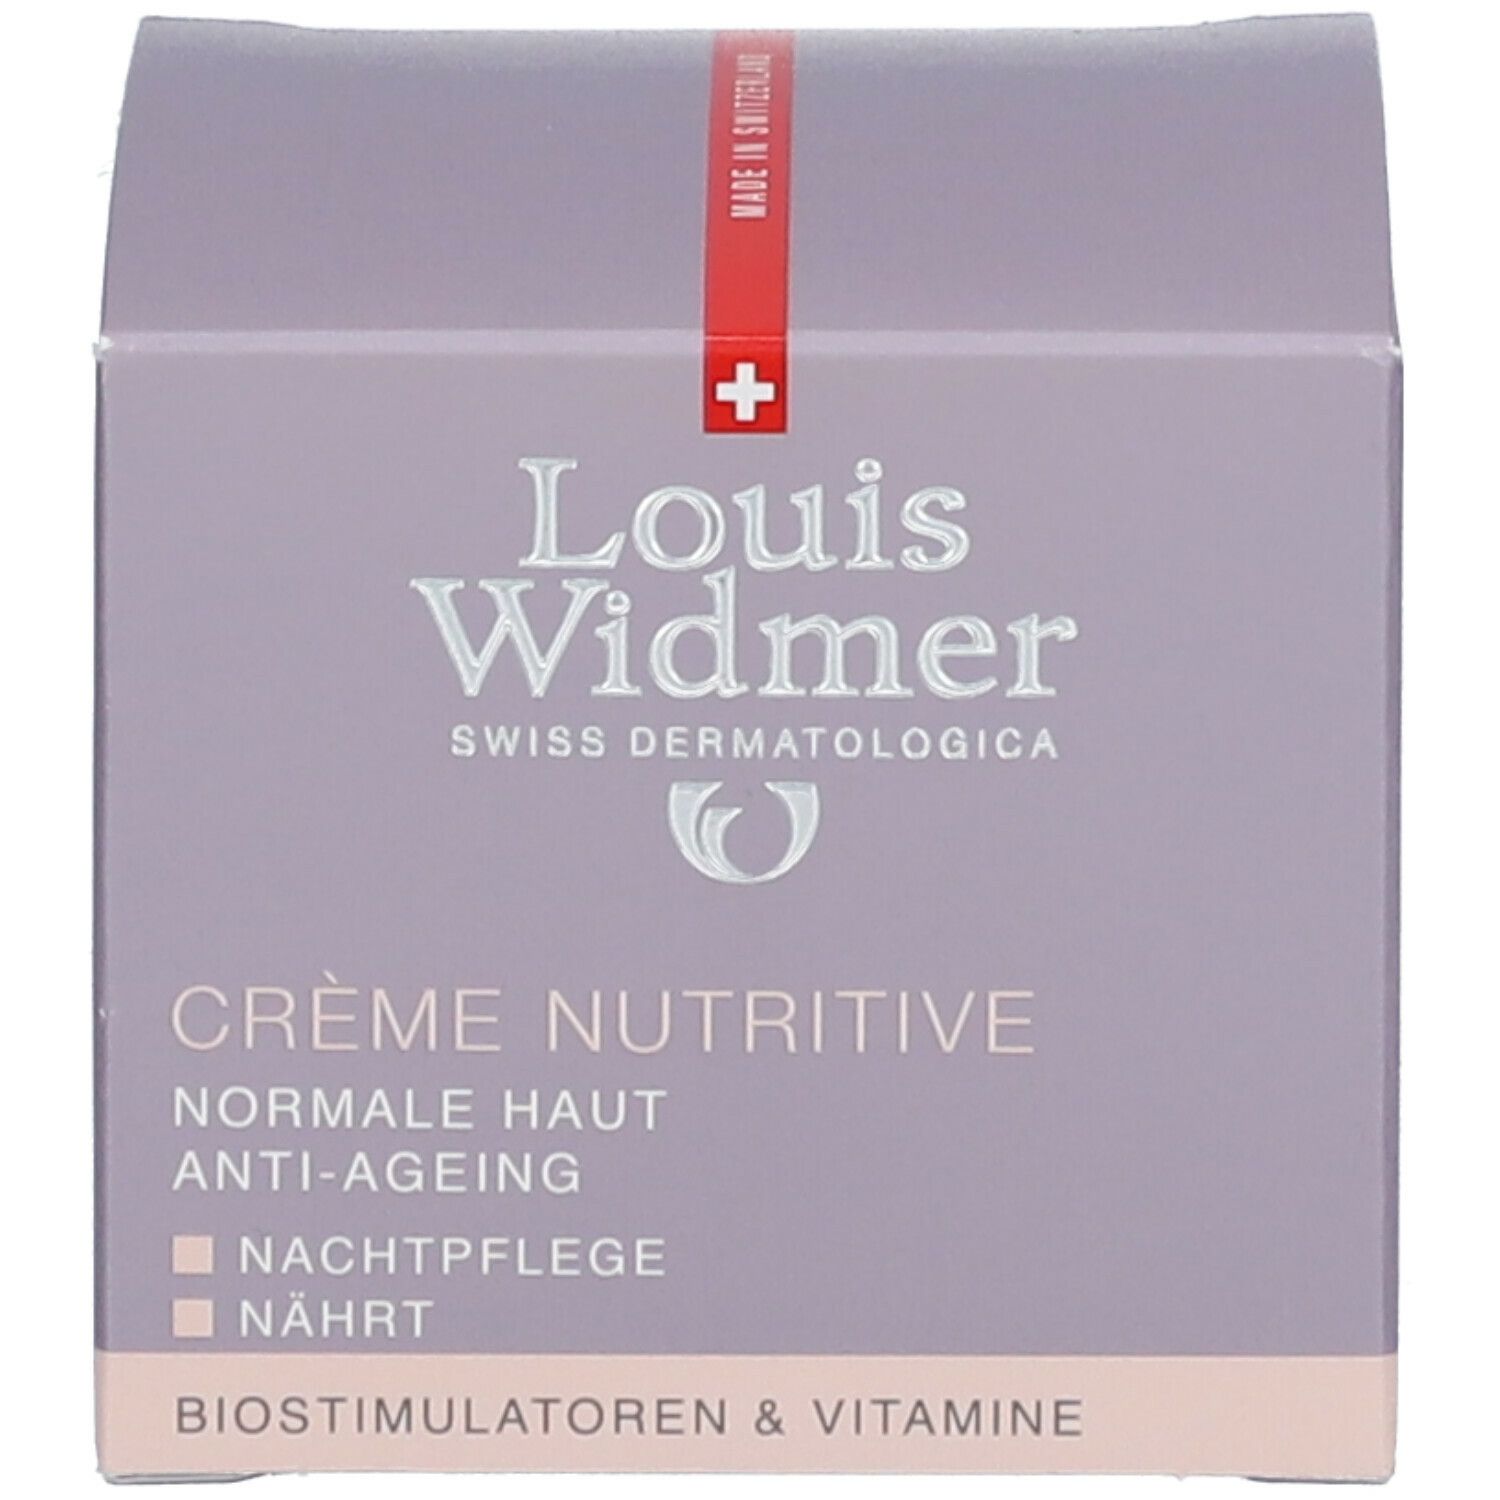 Louis Widmer Crème Nutritive leicht parfümiert